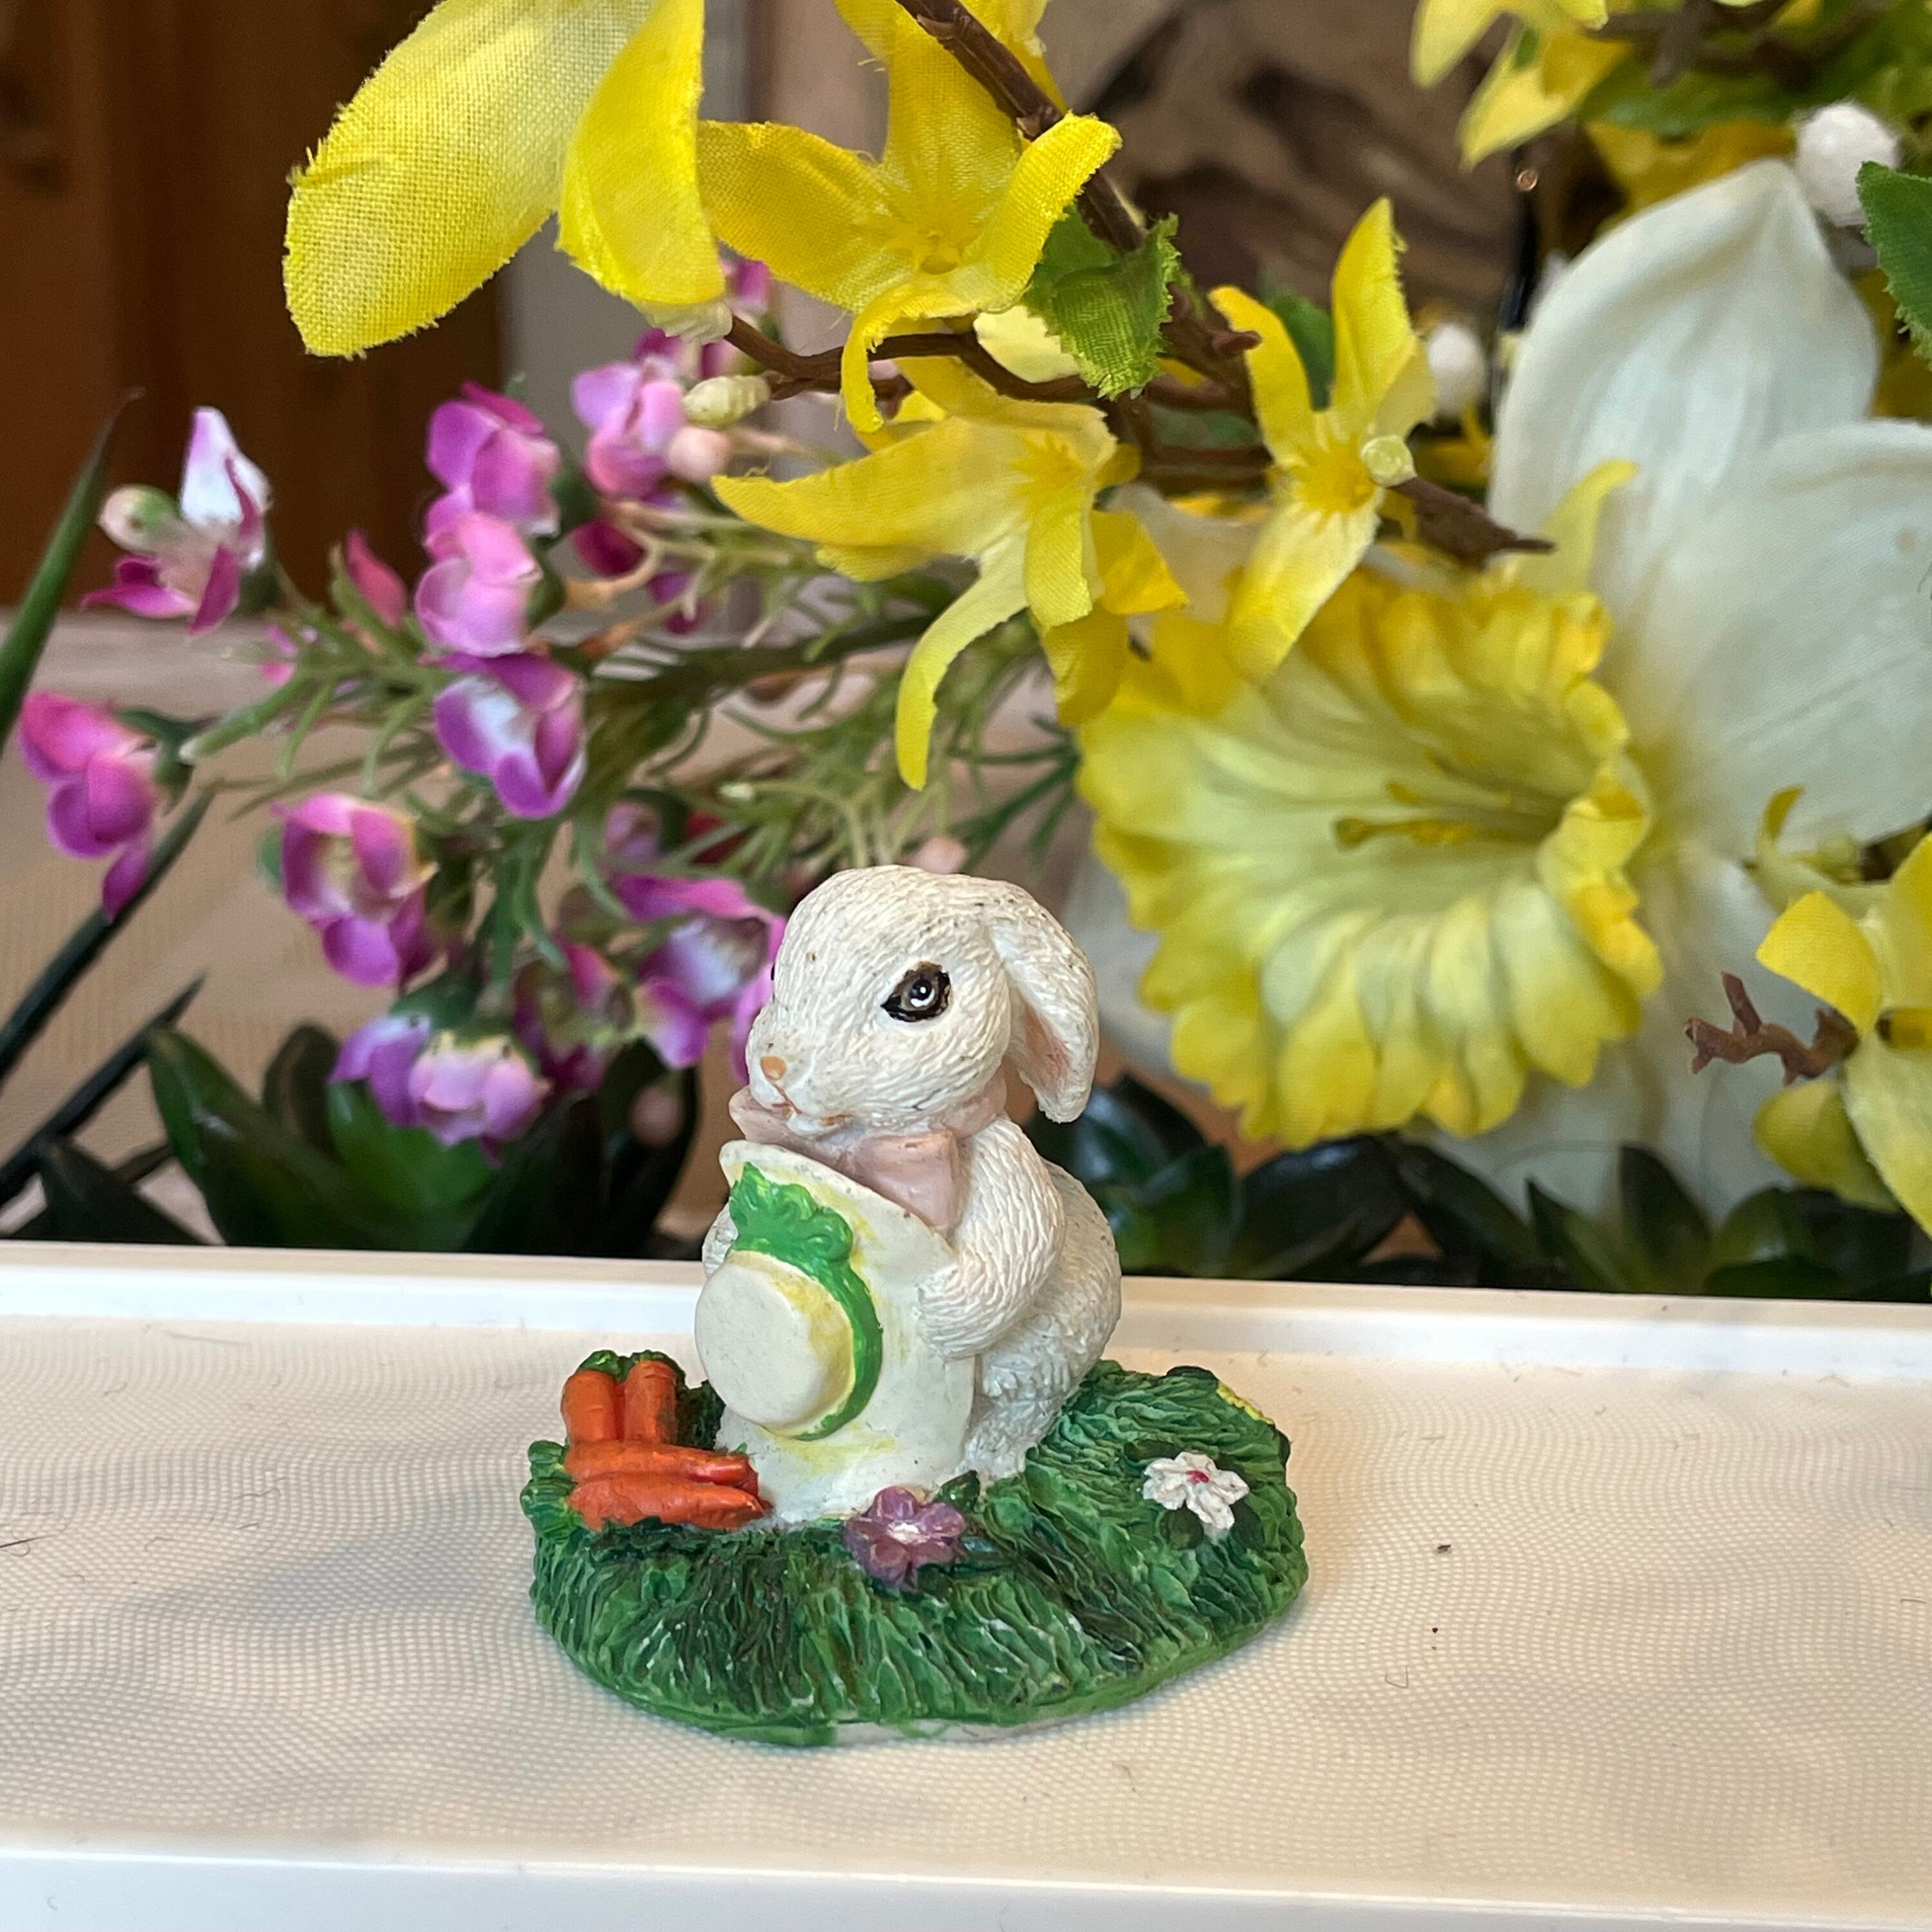 Set of 3 Vintage Resin Easter Bunny Figurines